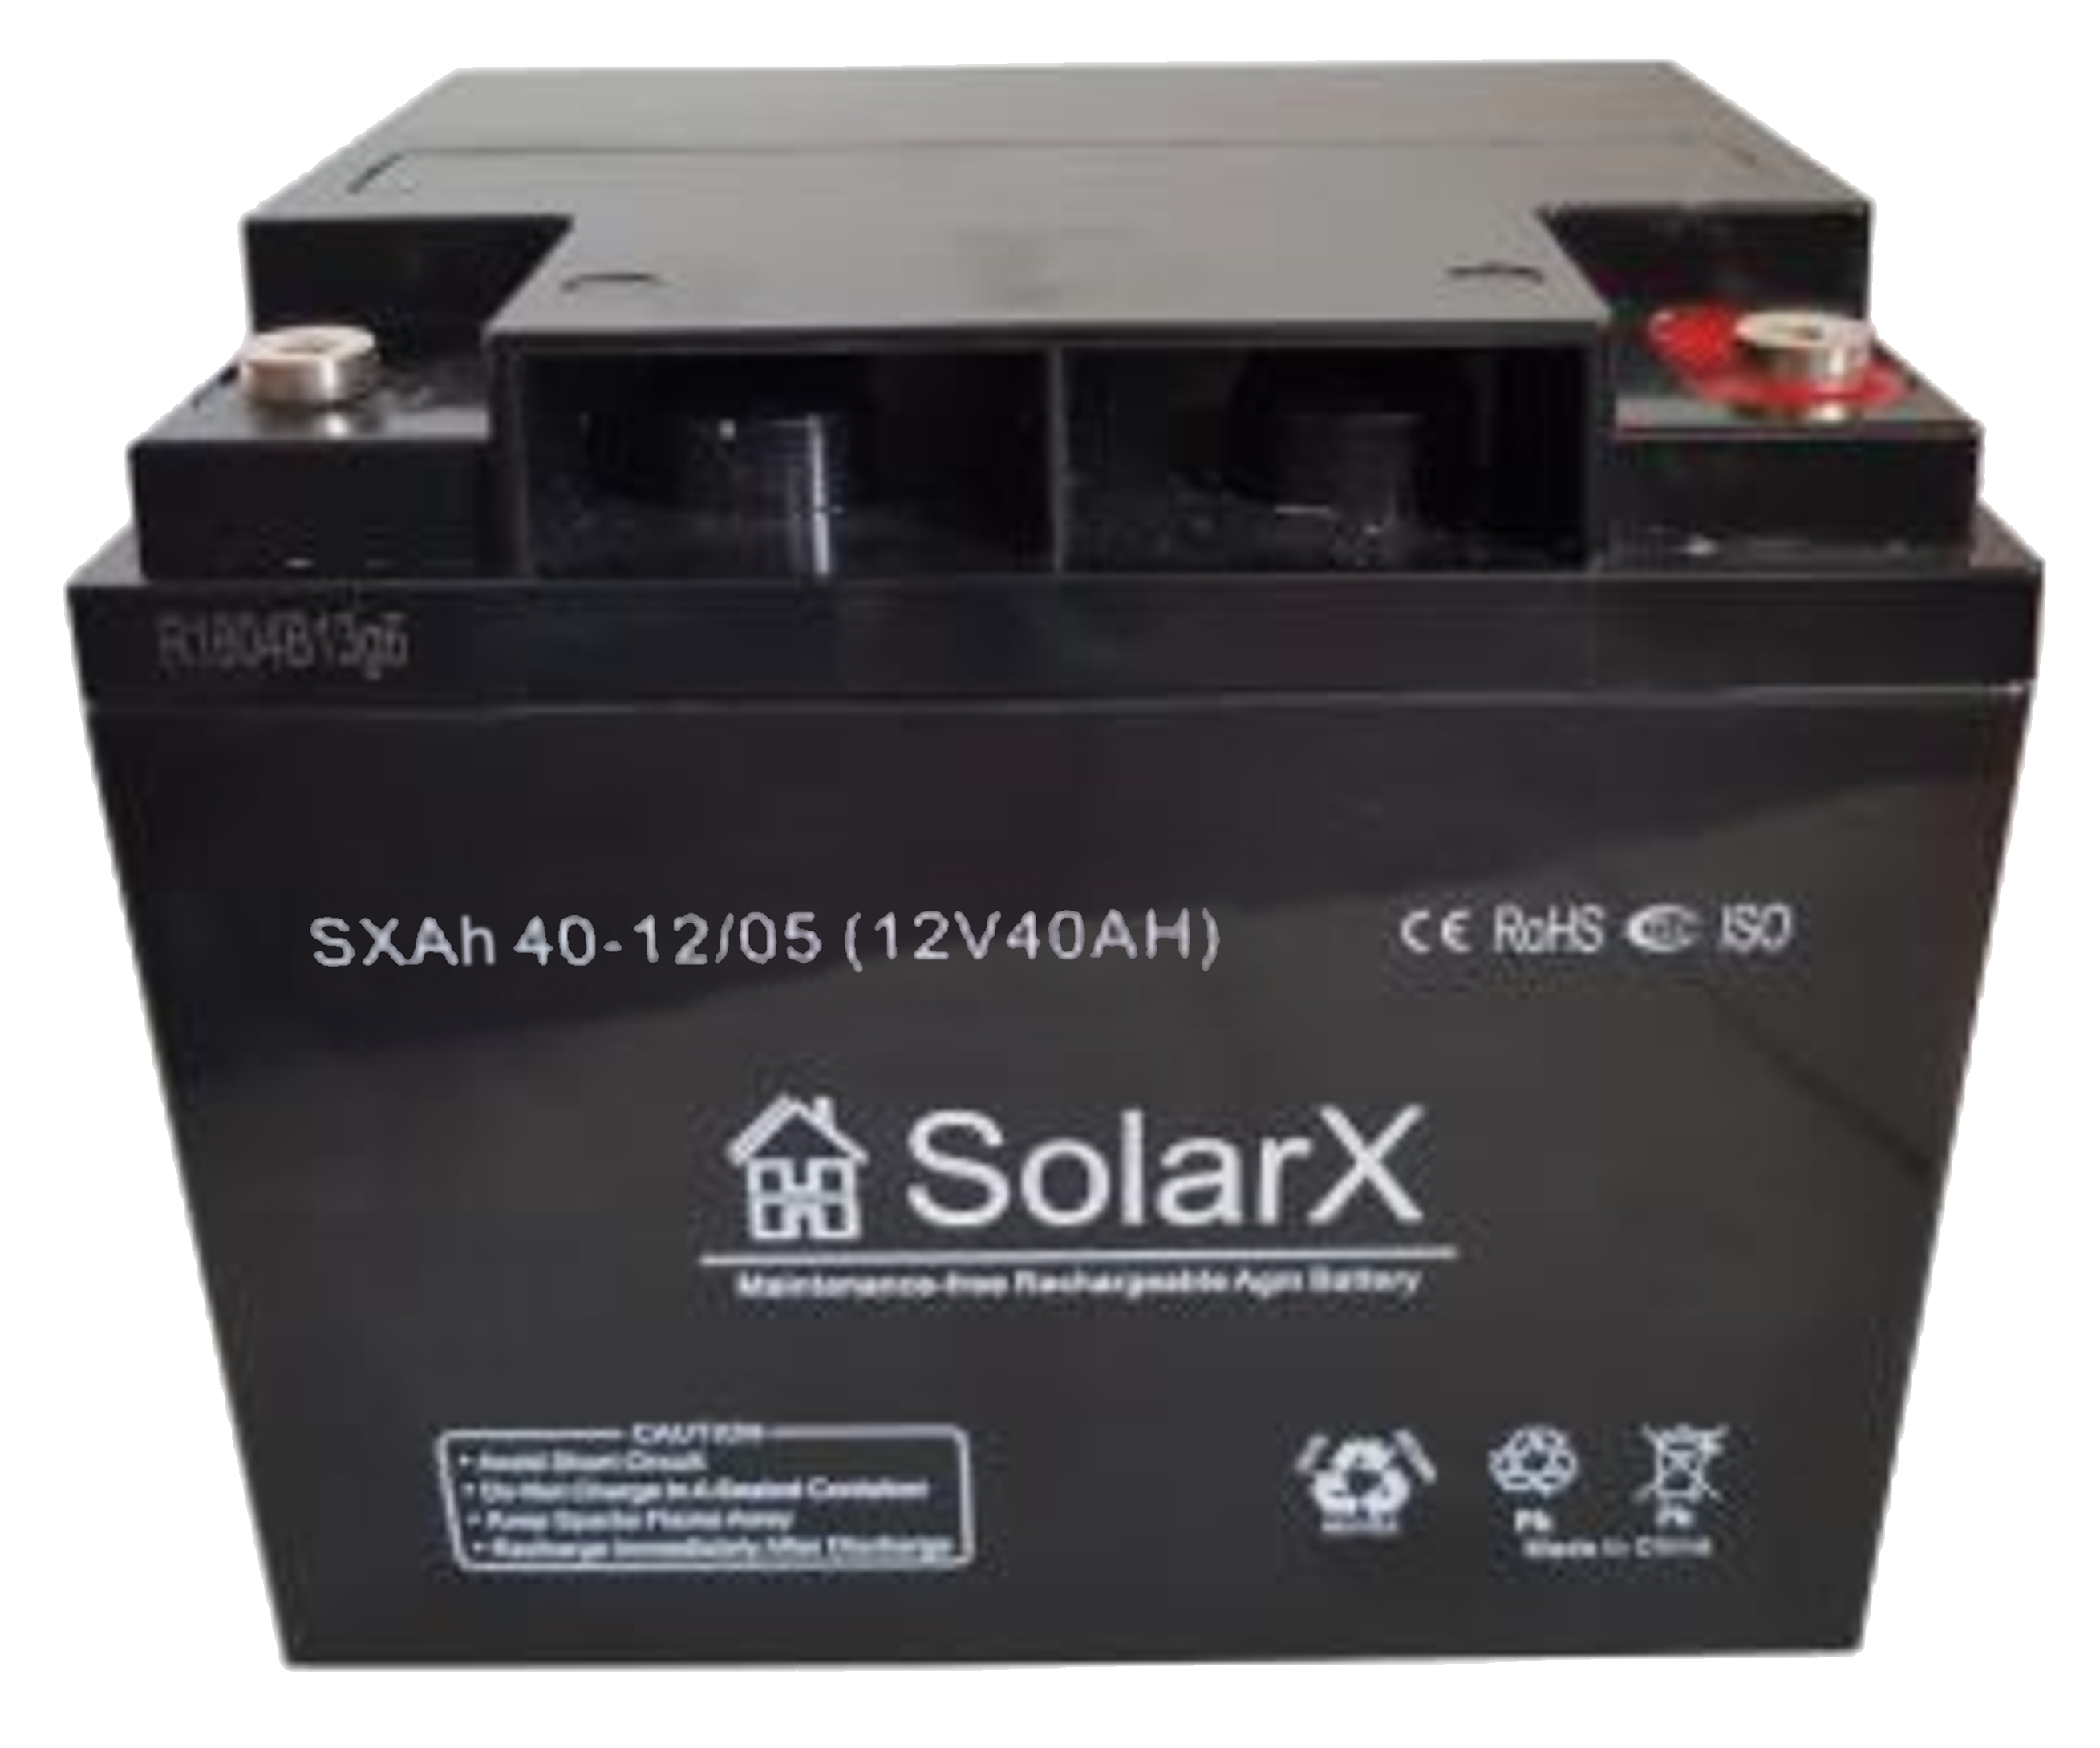 Solarx sxah 40 12